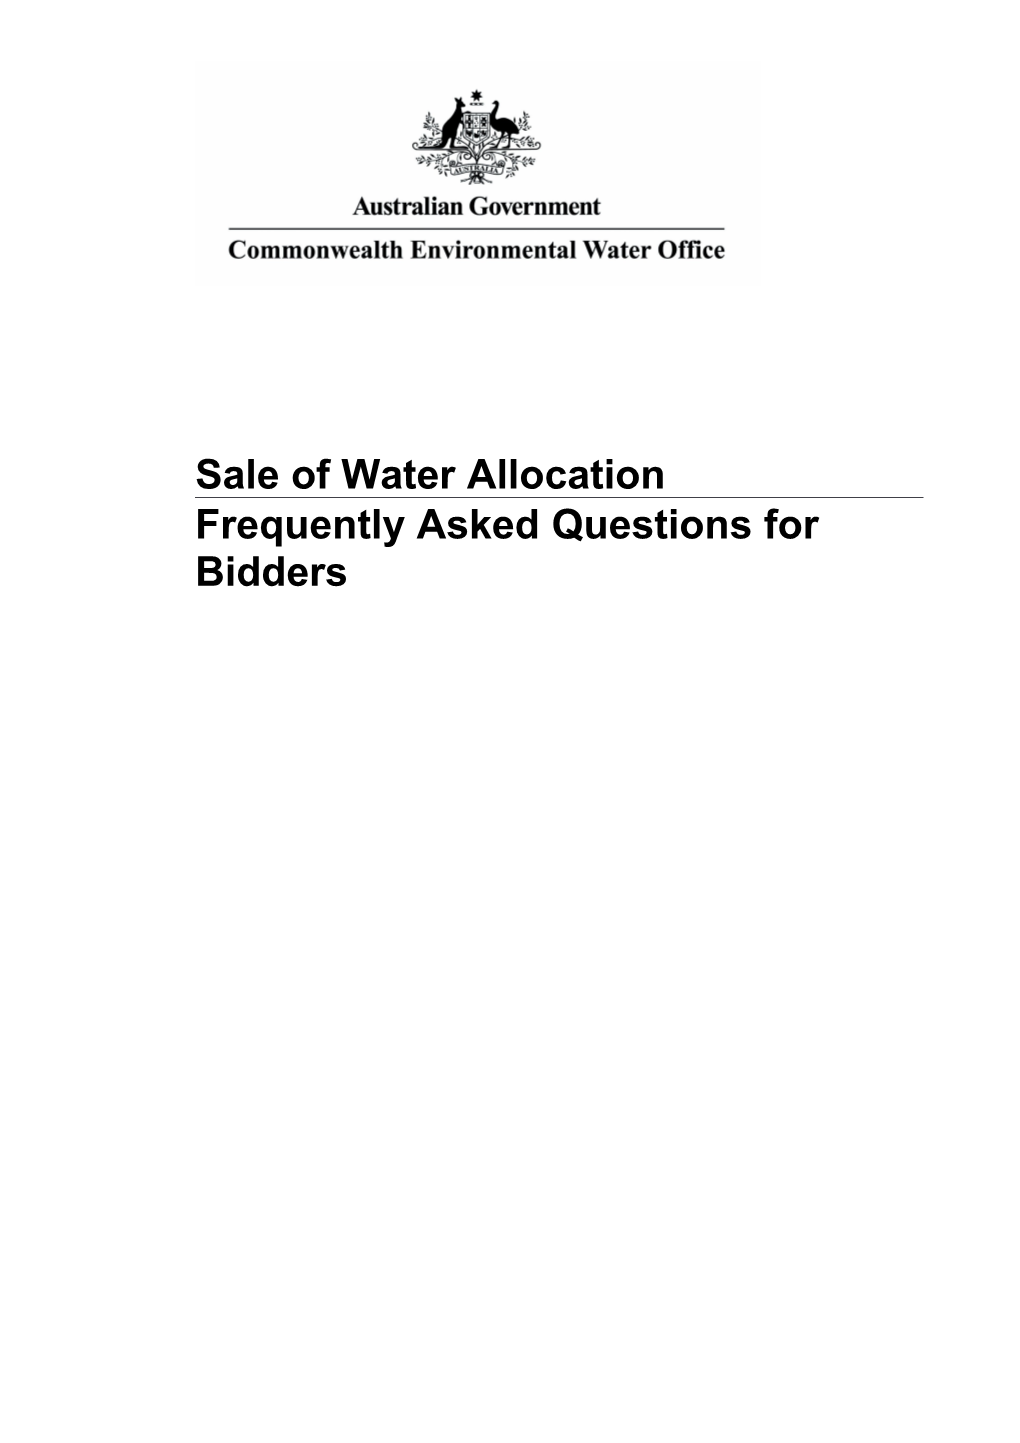 Sale of Water Allocation - Bidder FAQ